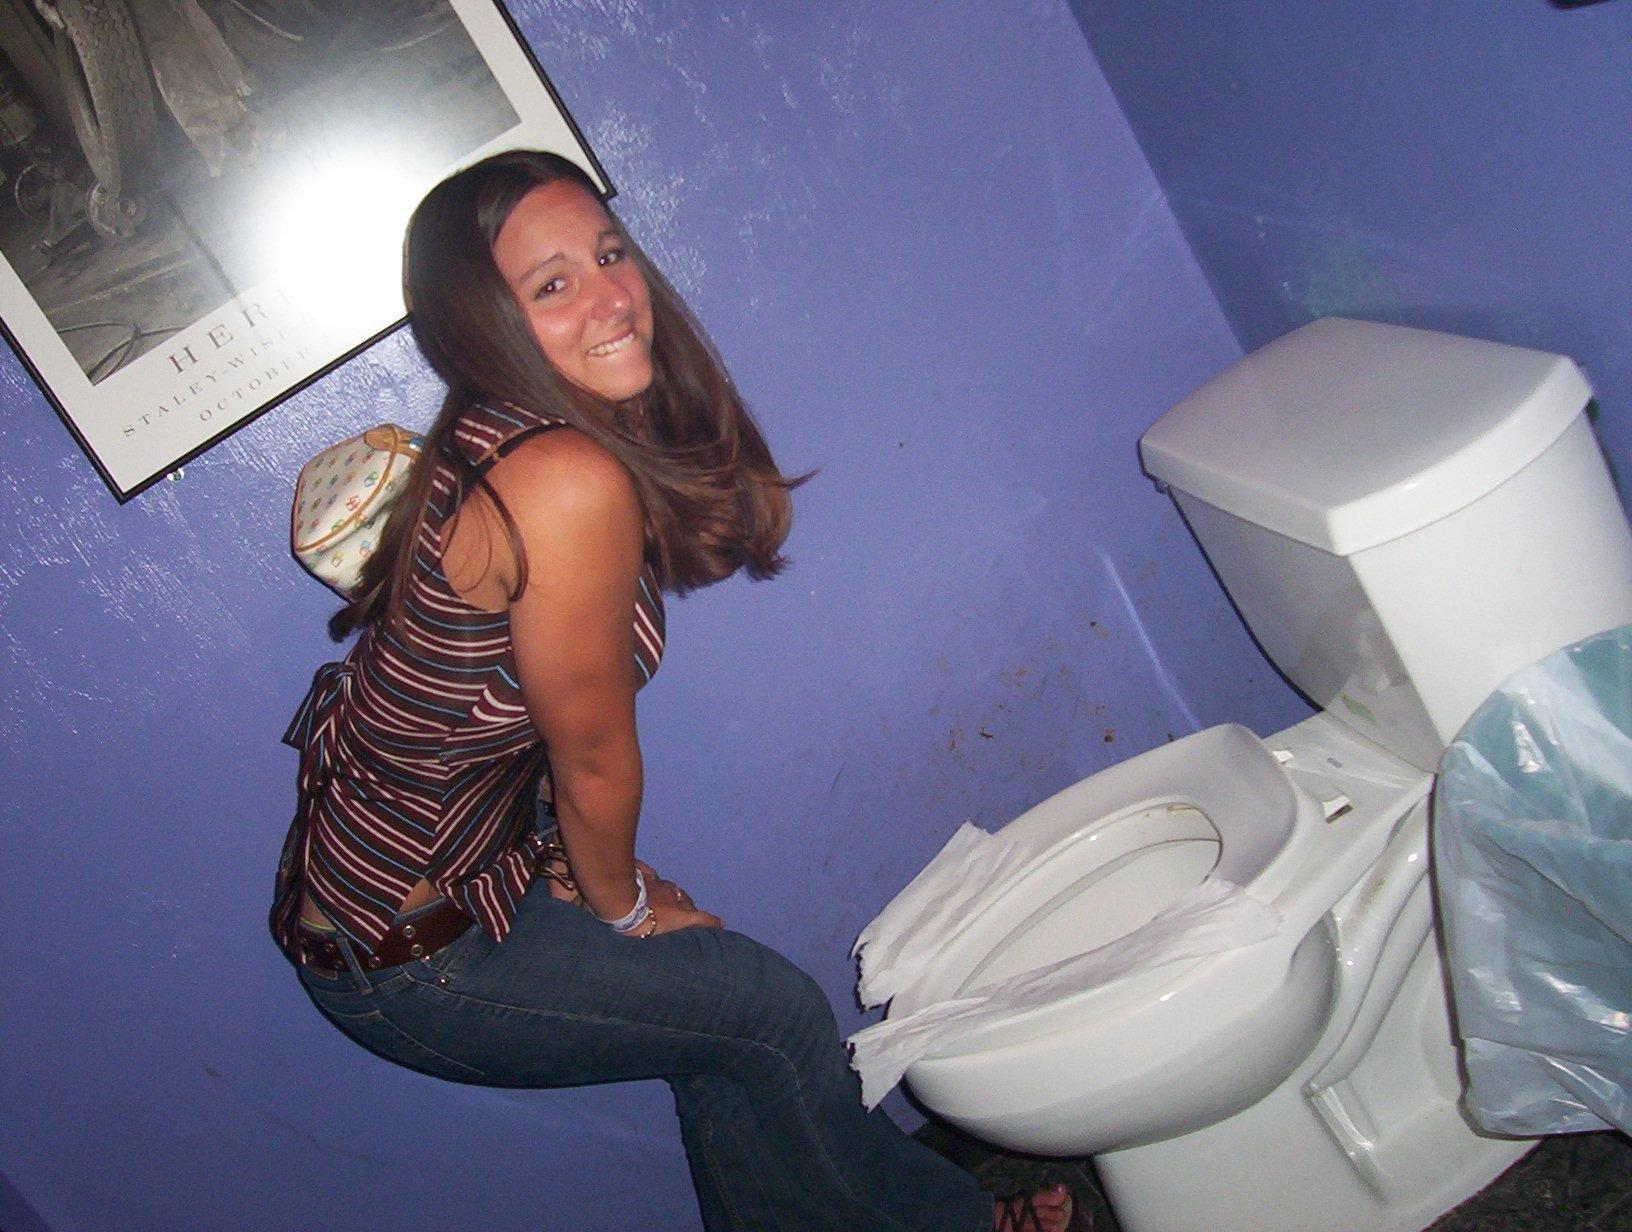 Toilet desperation peeing her pants